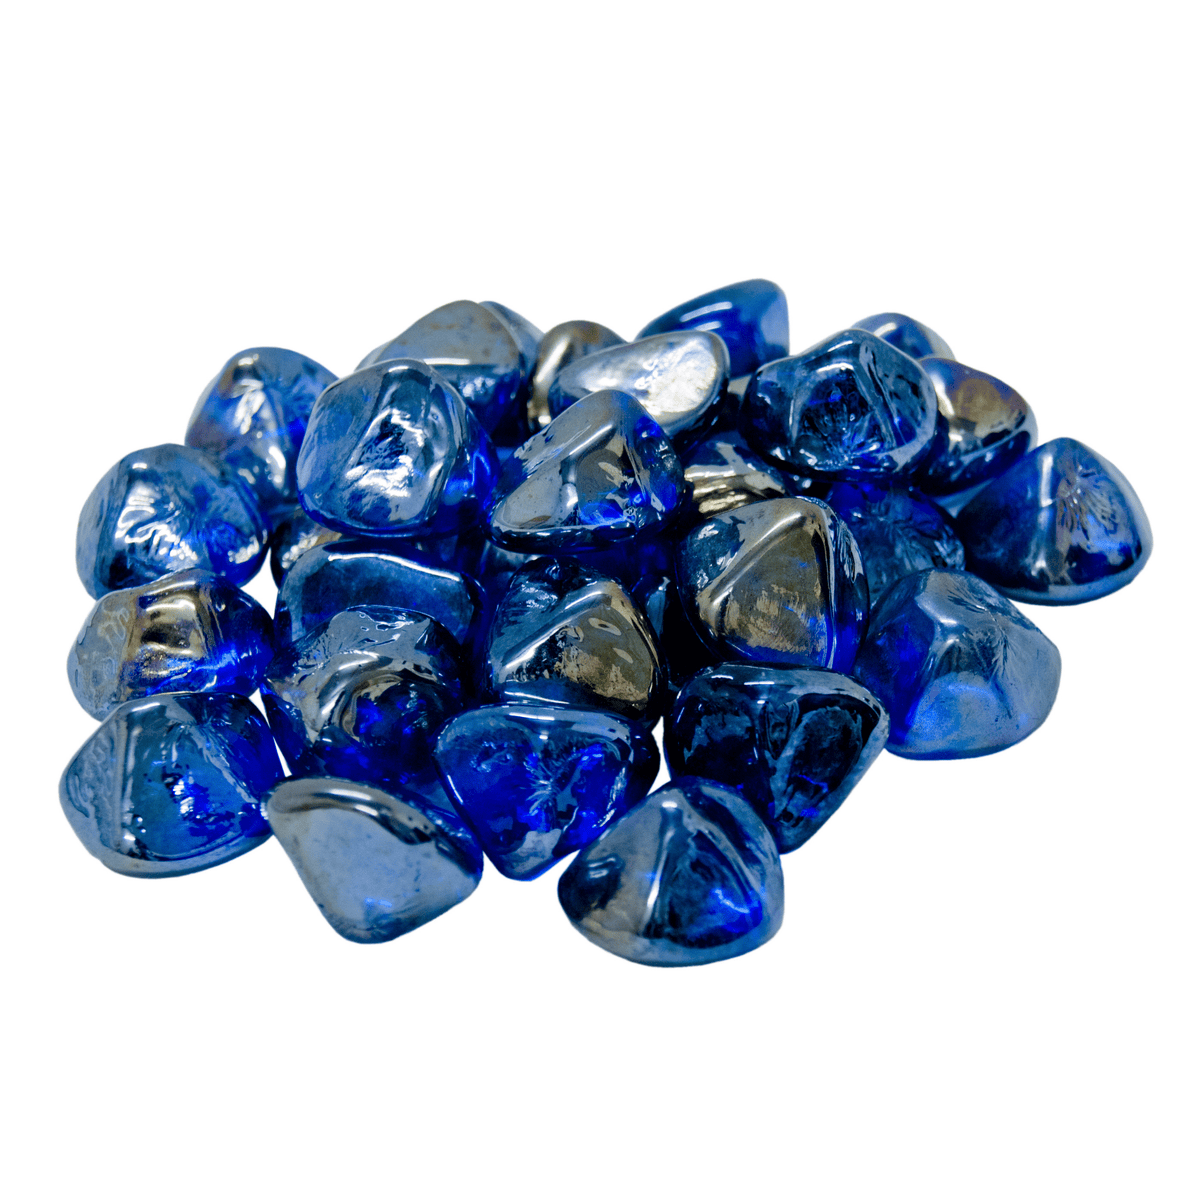 American Fyre Designs Accessories Pacific Blue / 5 lb. Package American Fyre Designs Diamond Nuggets / Black Luster, Clear, Deep Black, Emerald, Pacific Blue, Rose, or Steel Blue